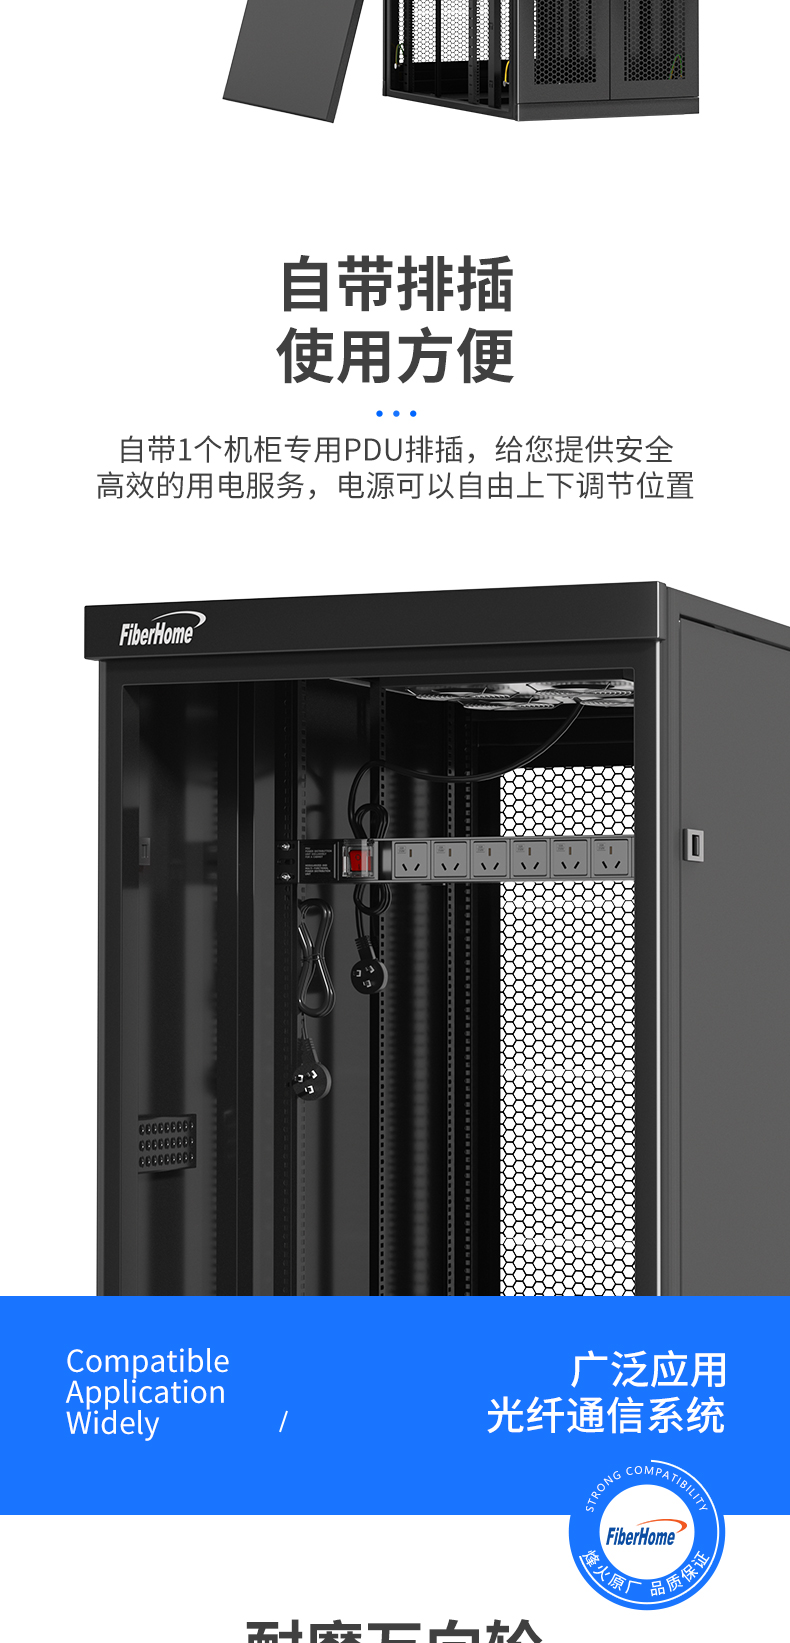 FiberHome monitoring weak current switch network server vertical network cabinet, FiberHome communication distributor